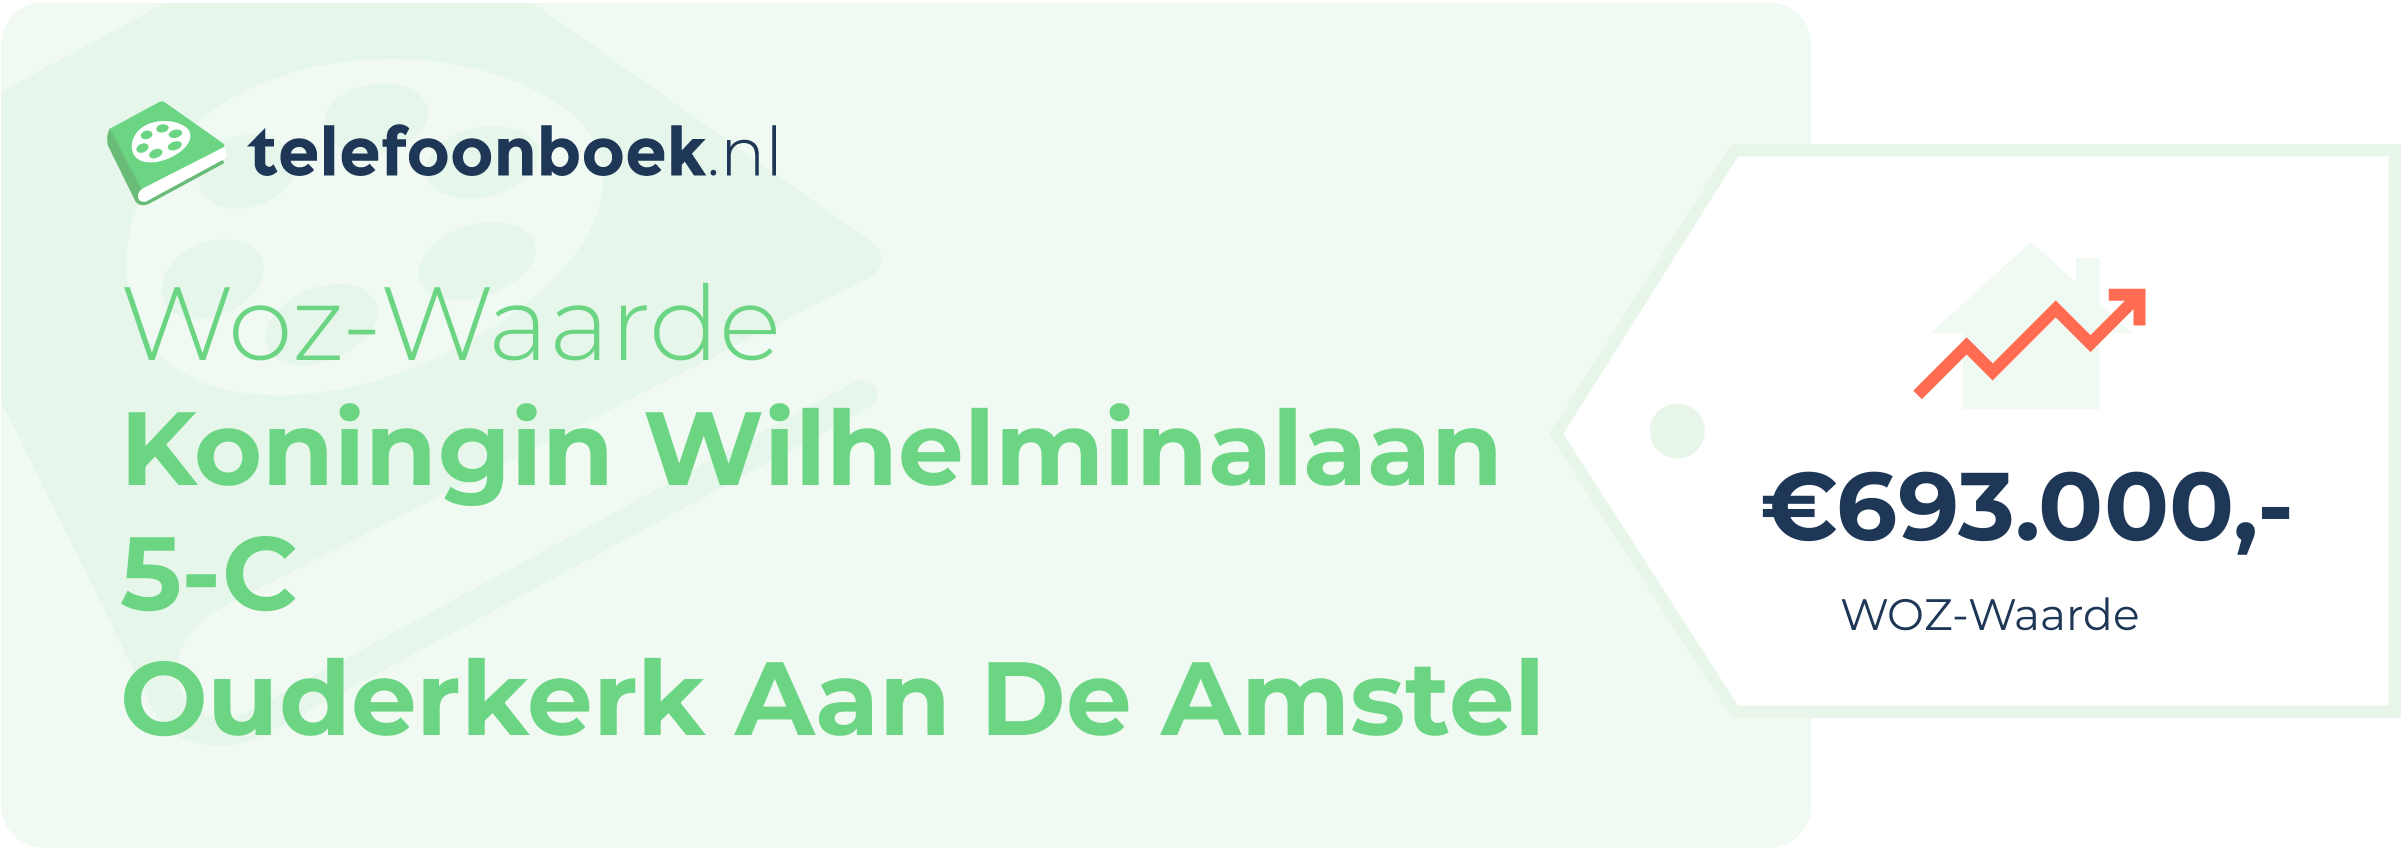 WOZ-waarde Koningin Wilhelminalaan 5-C Ouderkerk Aan De Amstel